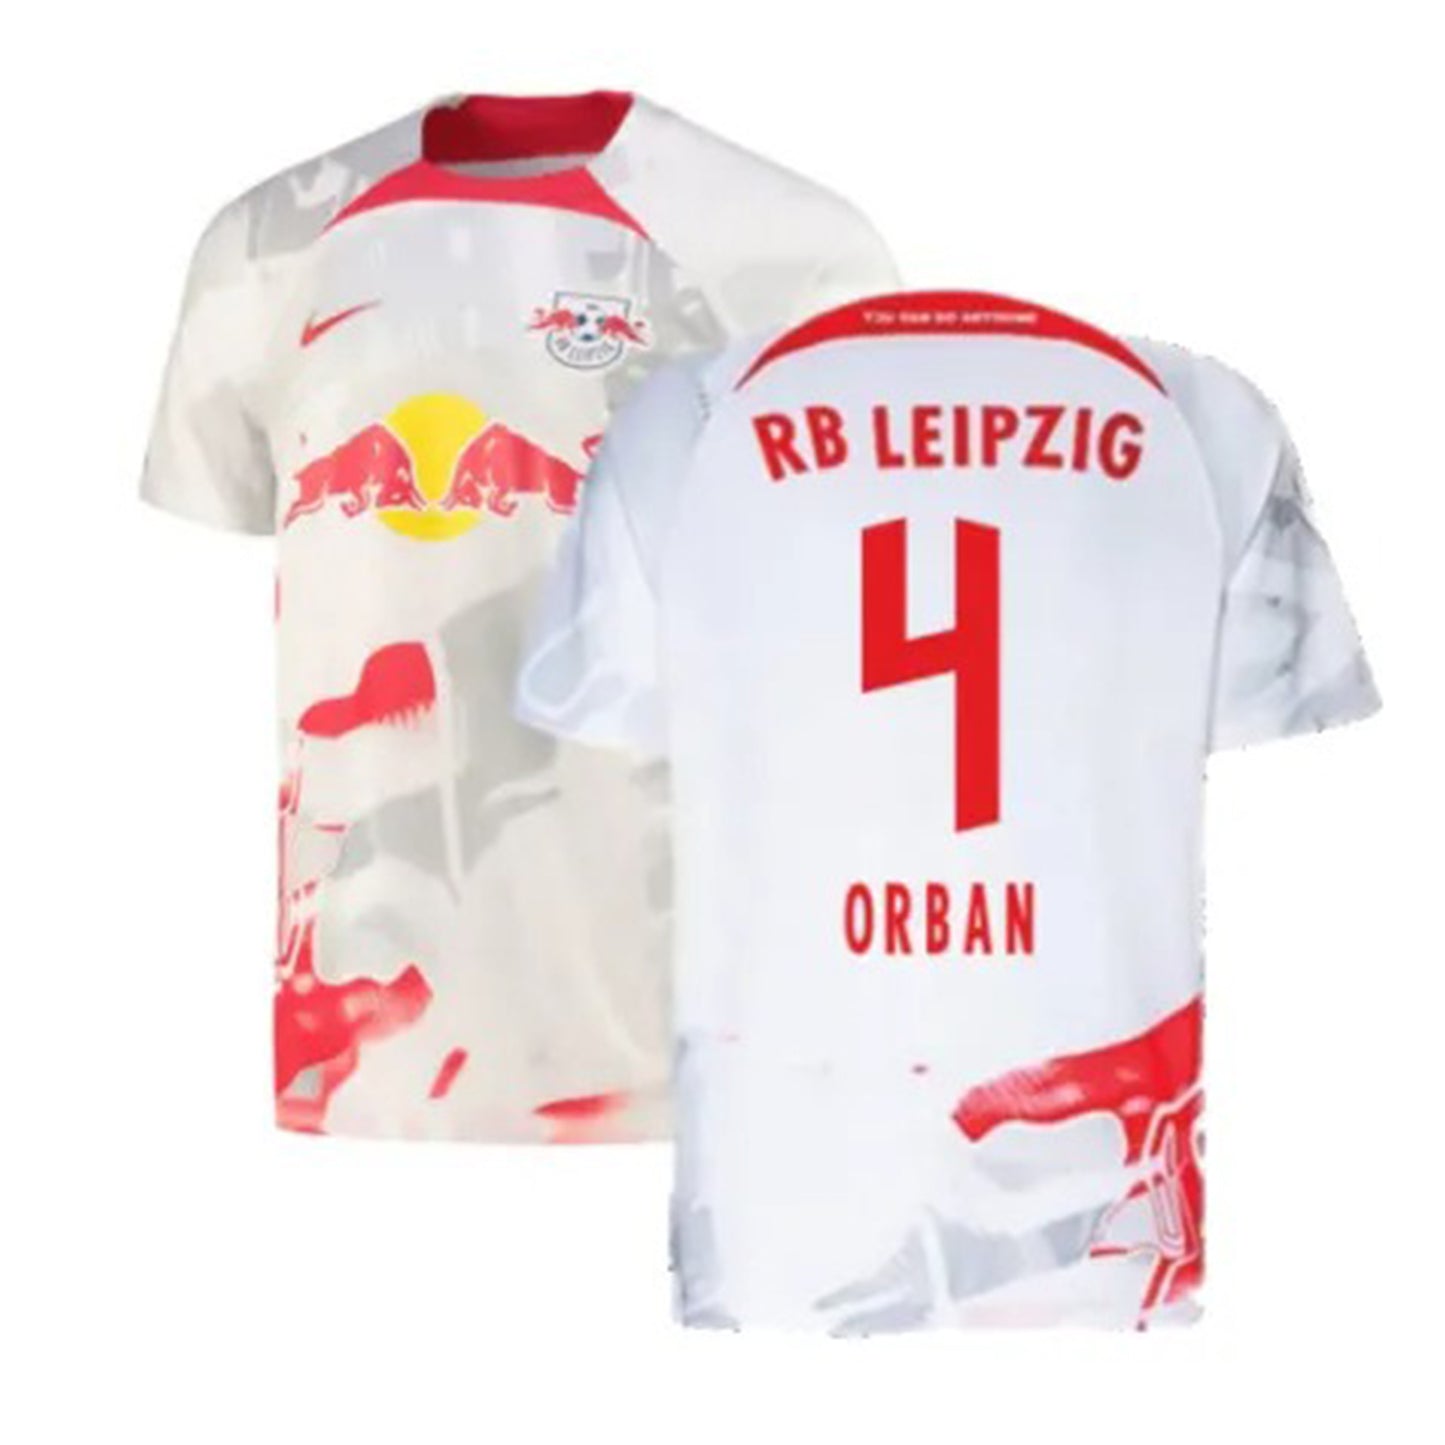 Willi Orbán RB Leipzig 4 Jersey